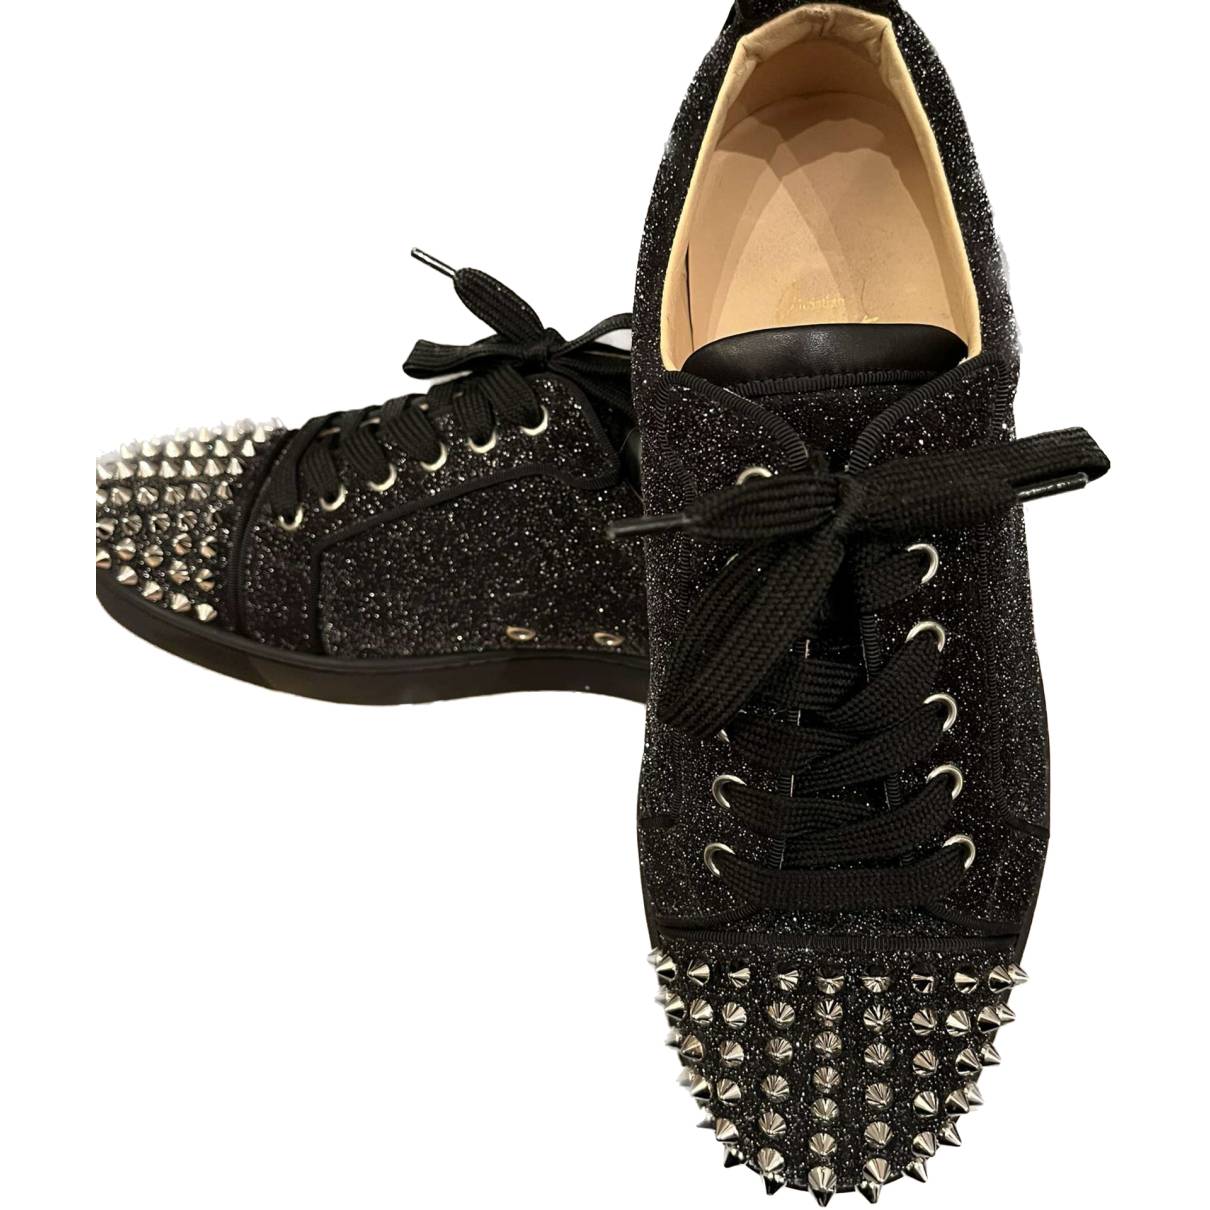 Christian Louboutin Red Black Louis Junior Spikes Sneaker Shoes for Men